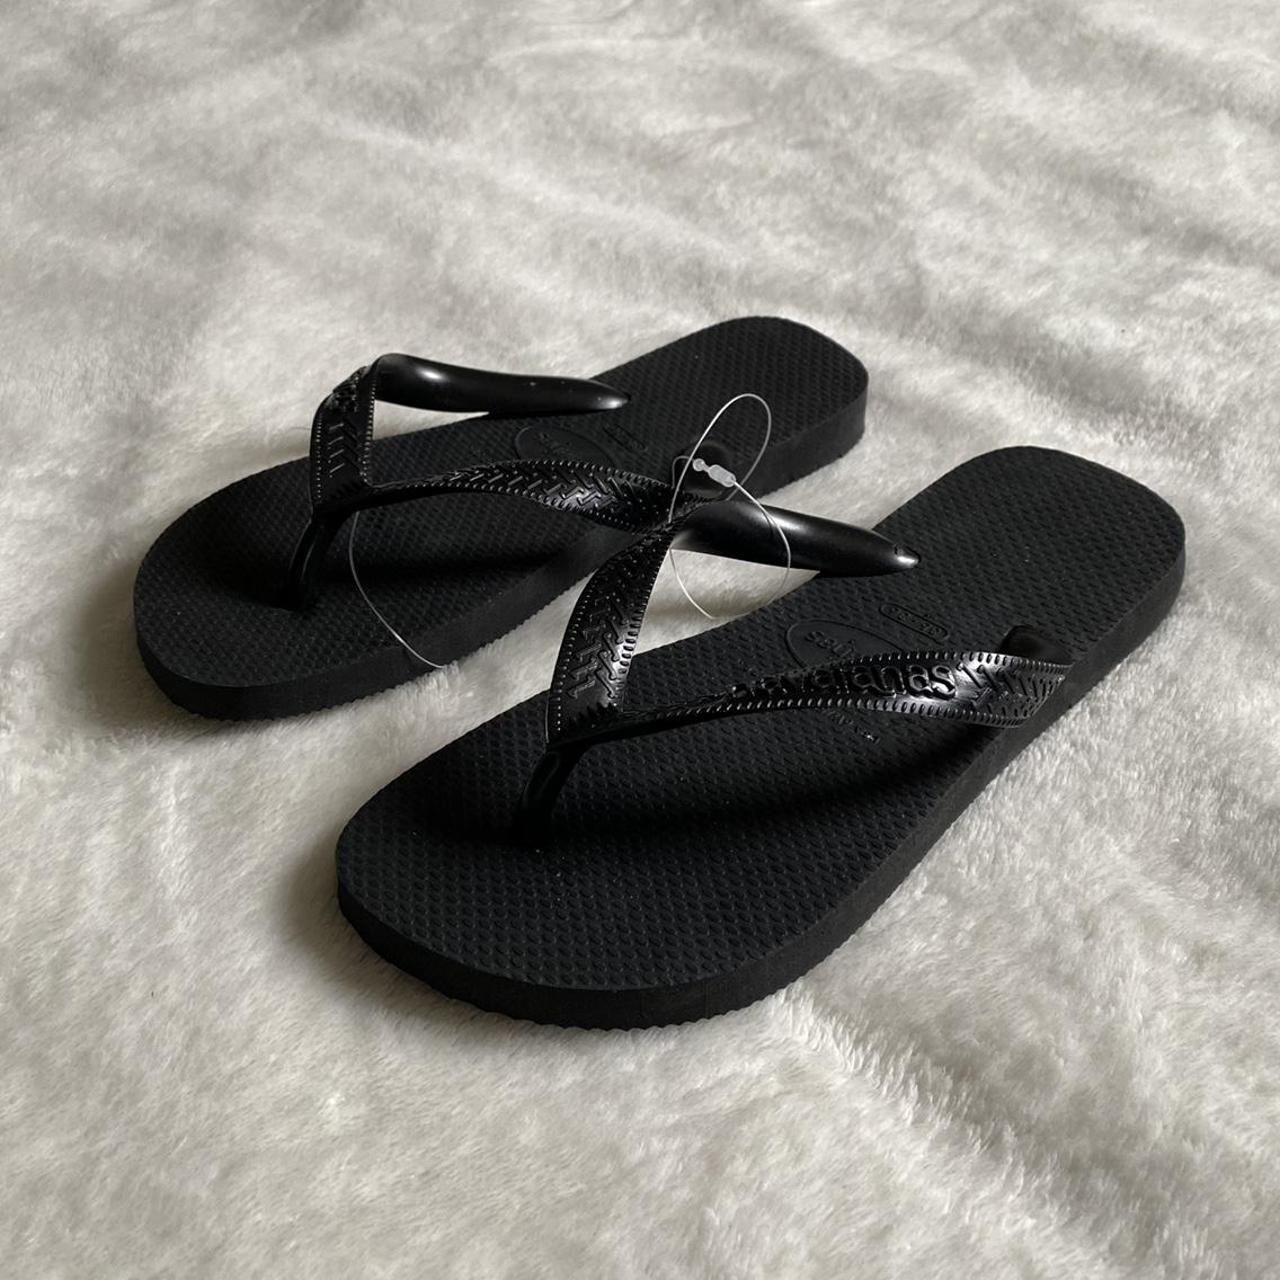 Product Image 1 - Havaianas Top Sandal Flip Flops